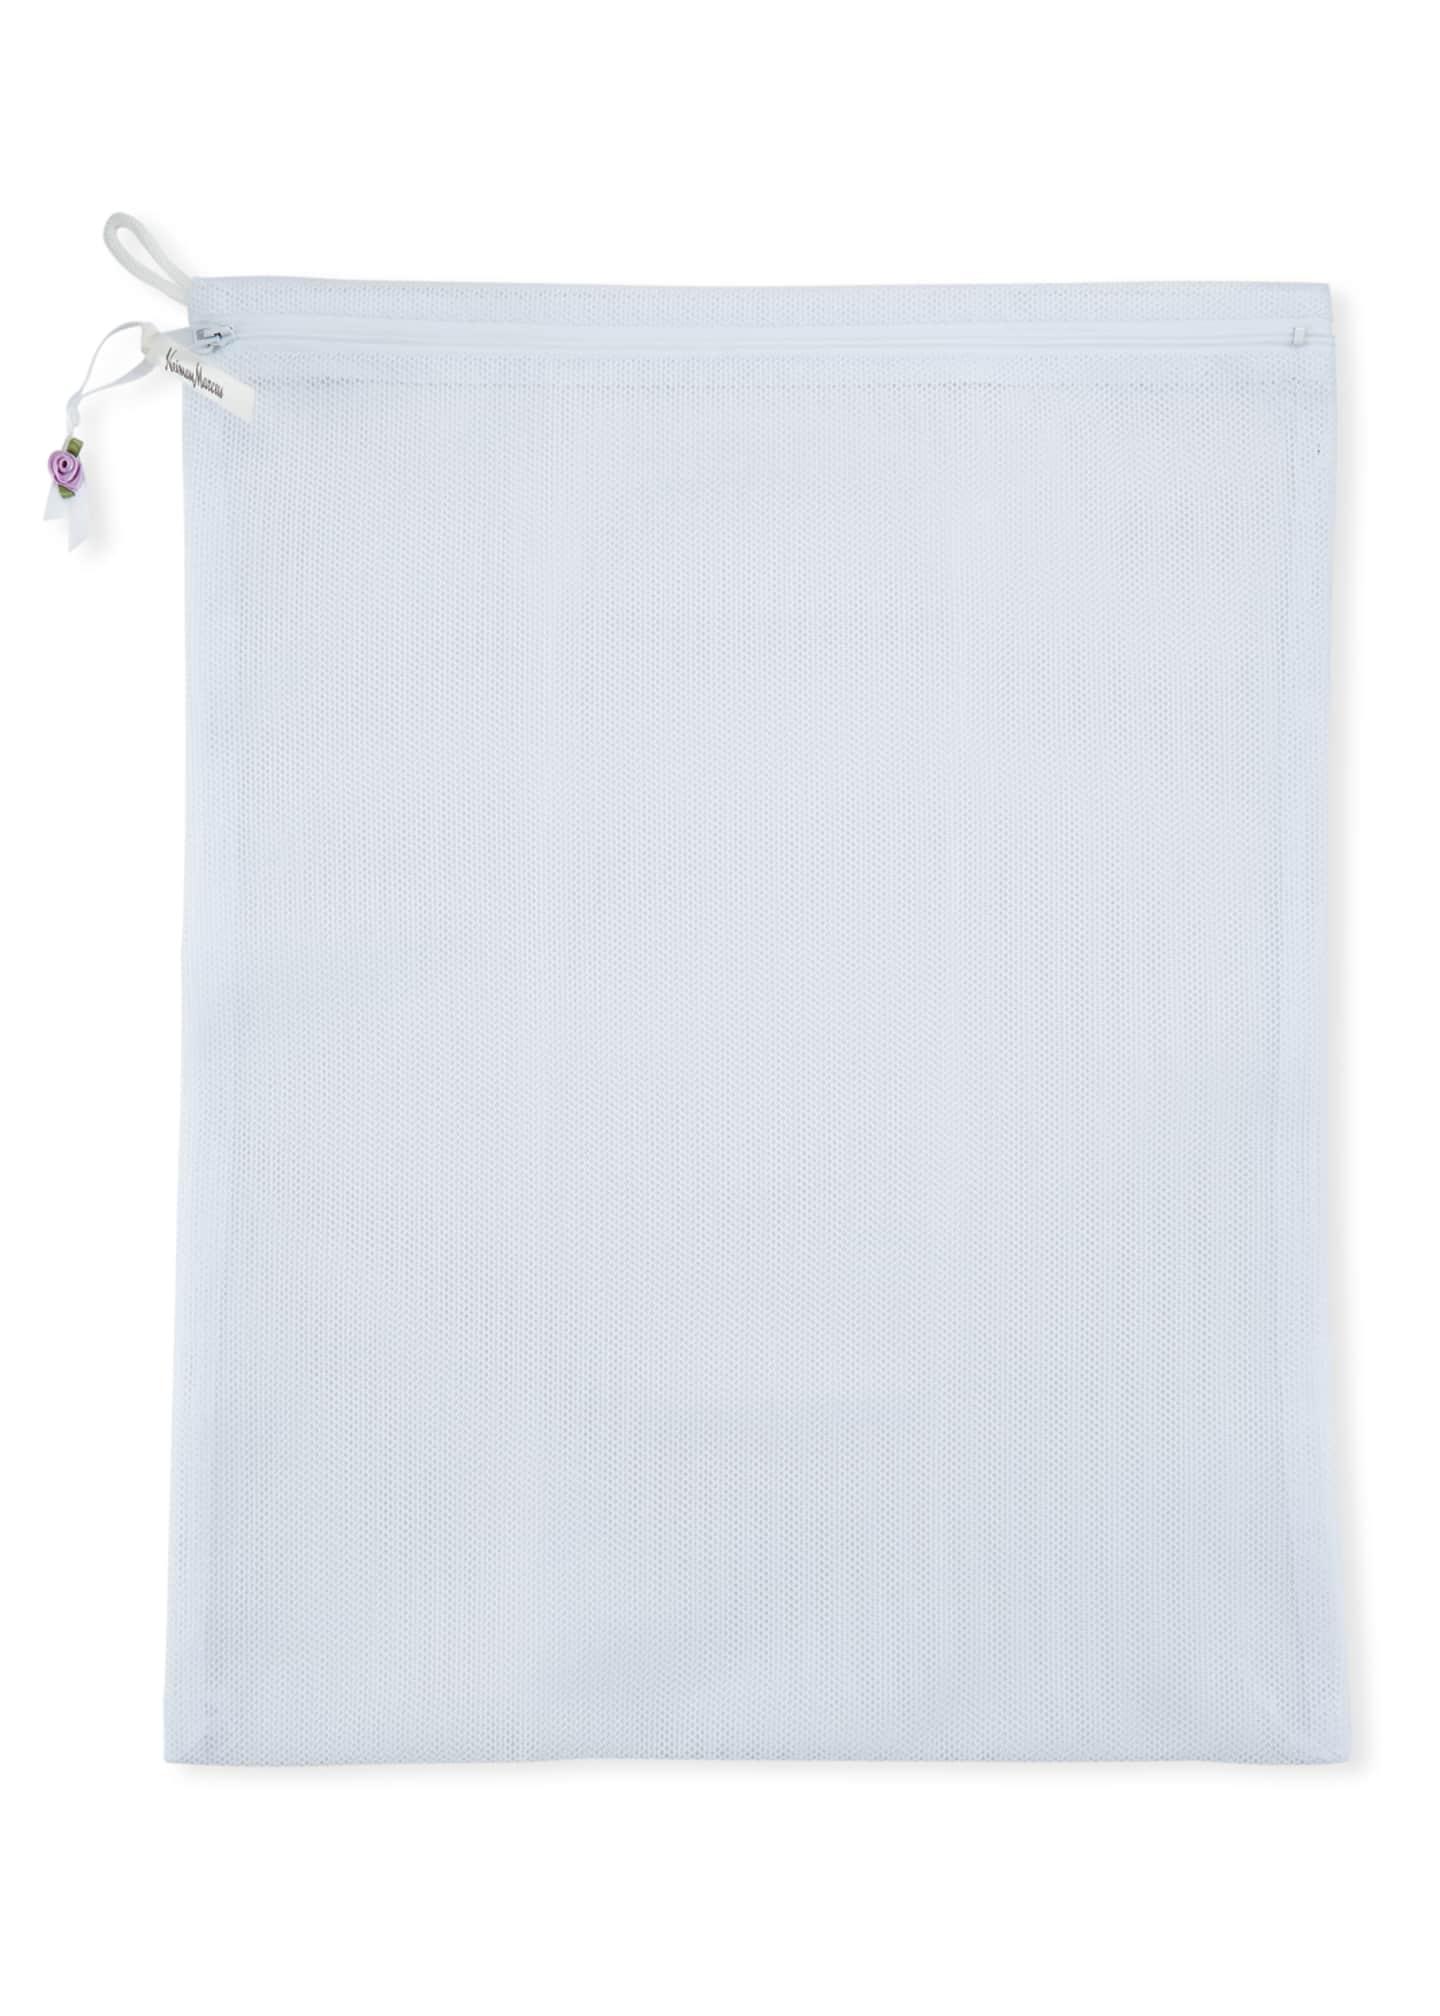 Guardian Products Fine Mesh Lingerie Wash Bag - 14x17 - Bergdorf Goodman